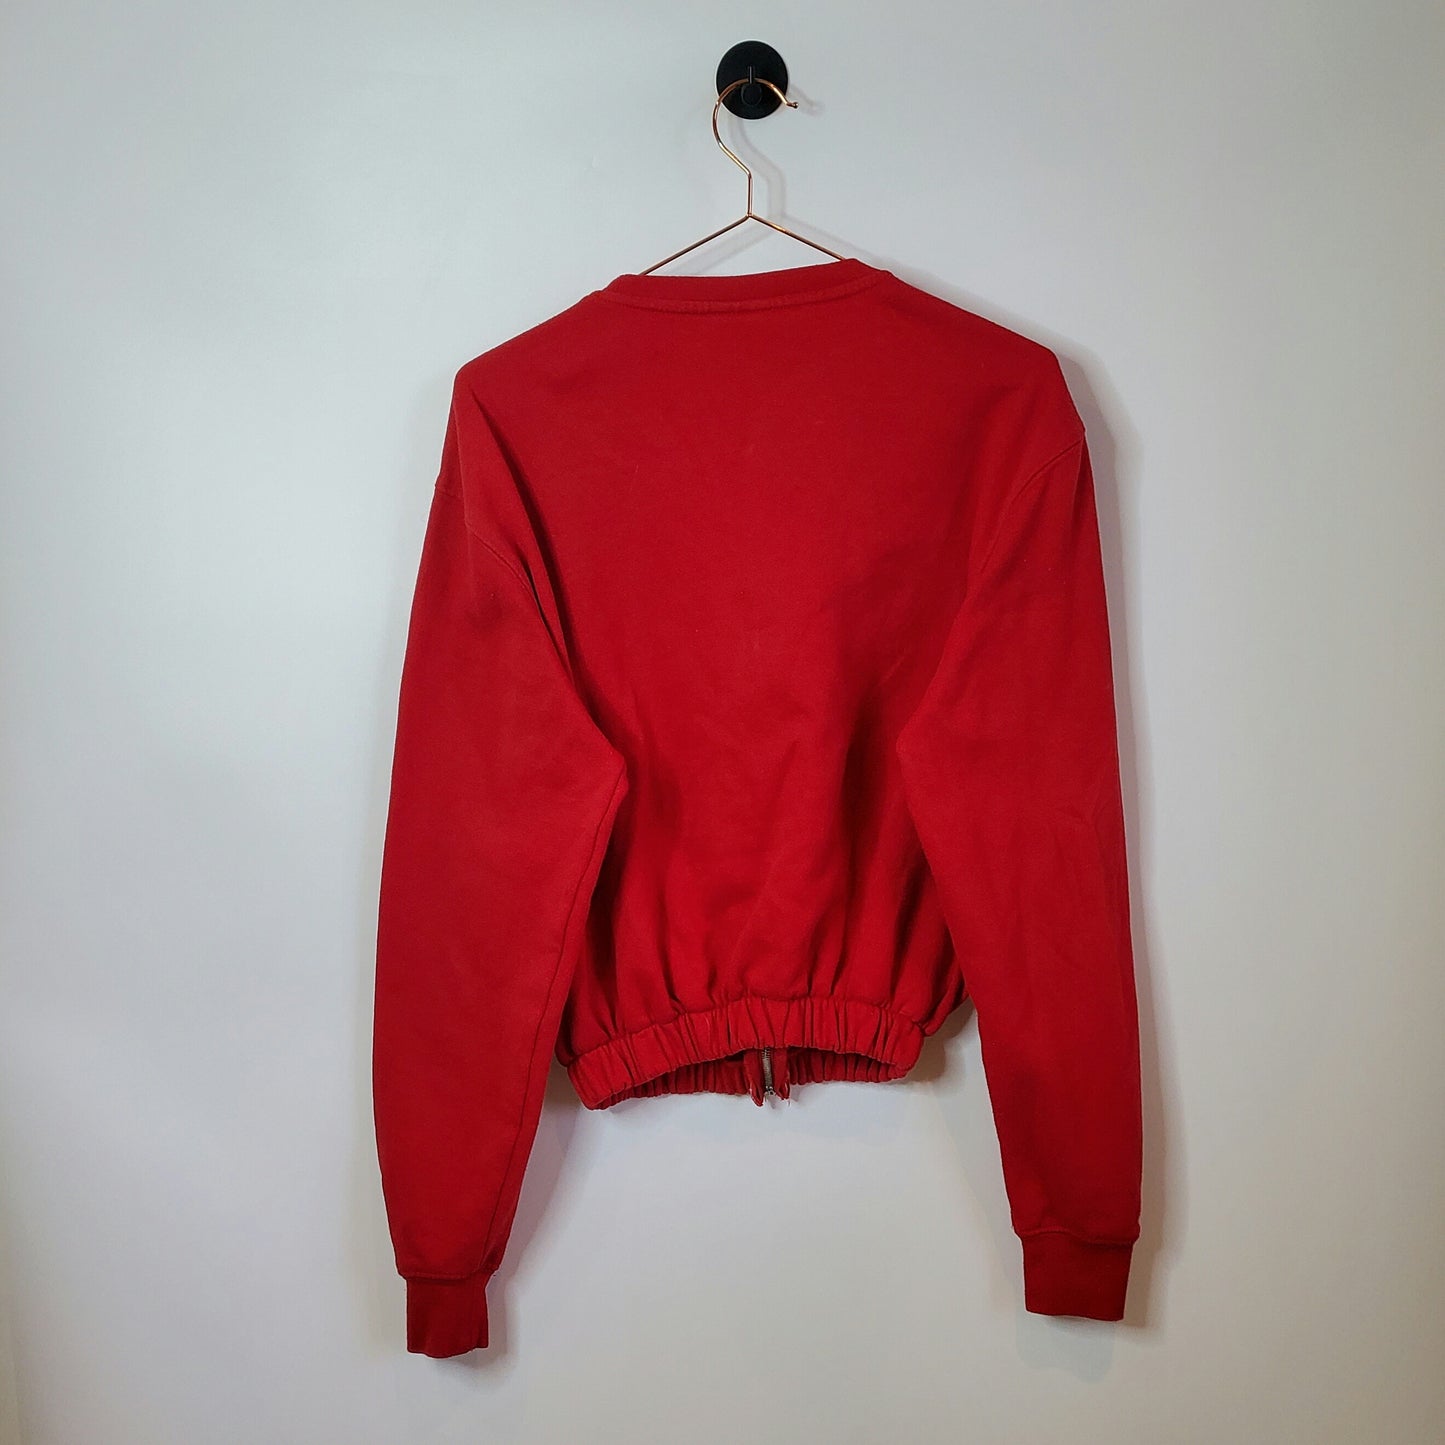 Vintage Reworked 90's Wisconsin Sweatshirt | Size S